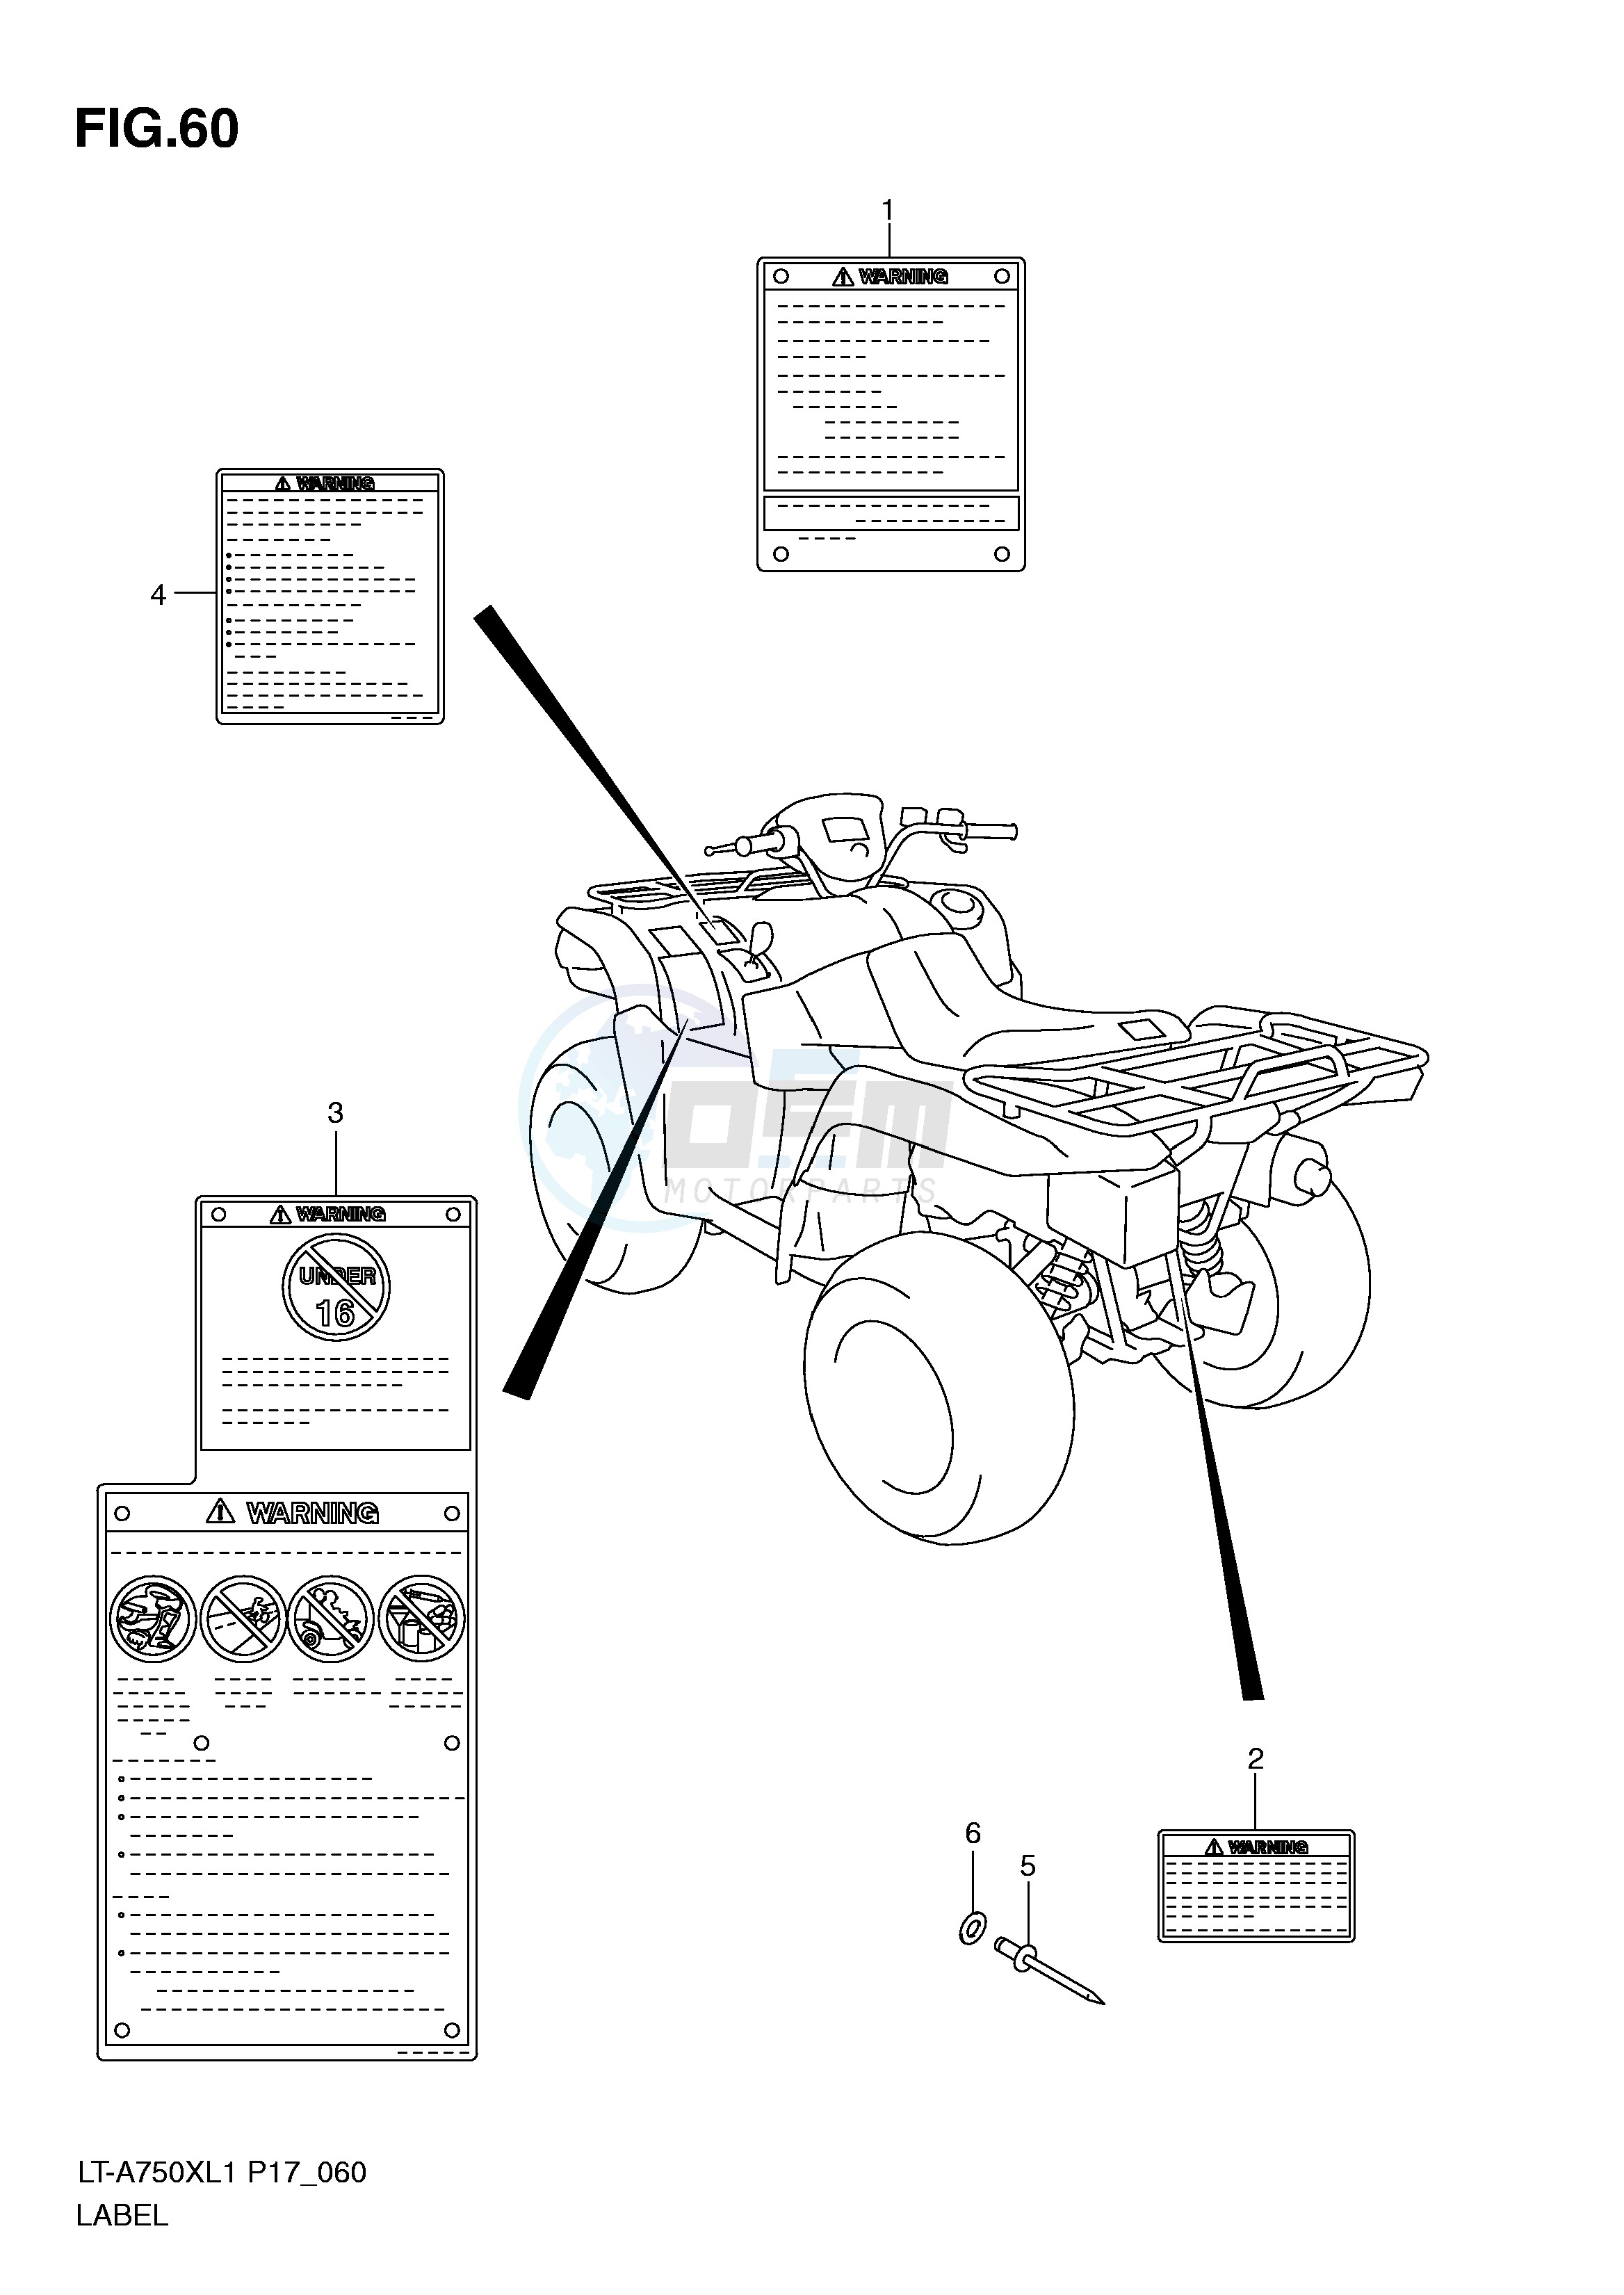 LABEL (LT-A750XL1 P24) blueprint